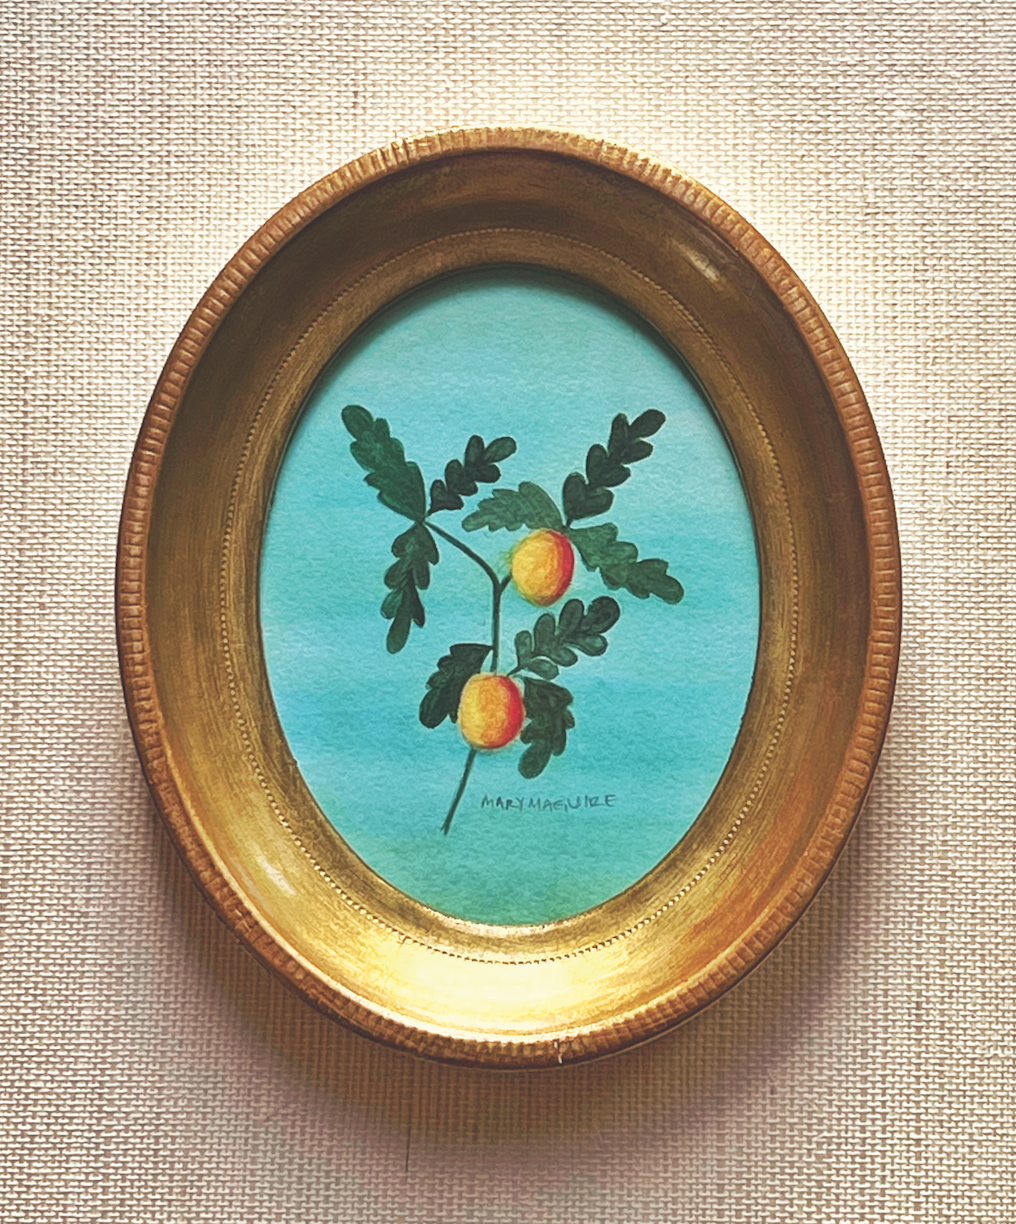 'Peaches' -5 1/2 x 6 3/4 inch gilt oval